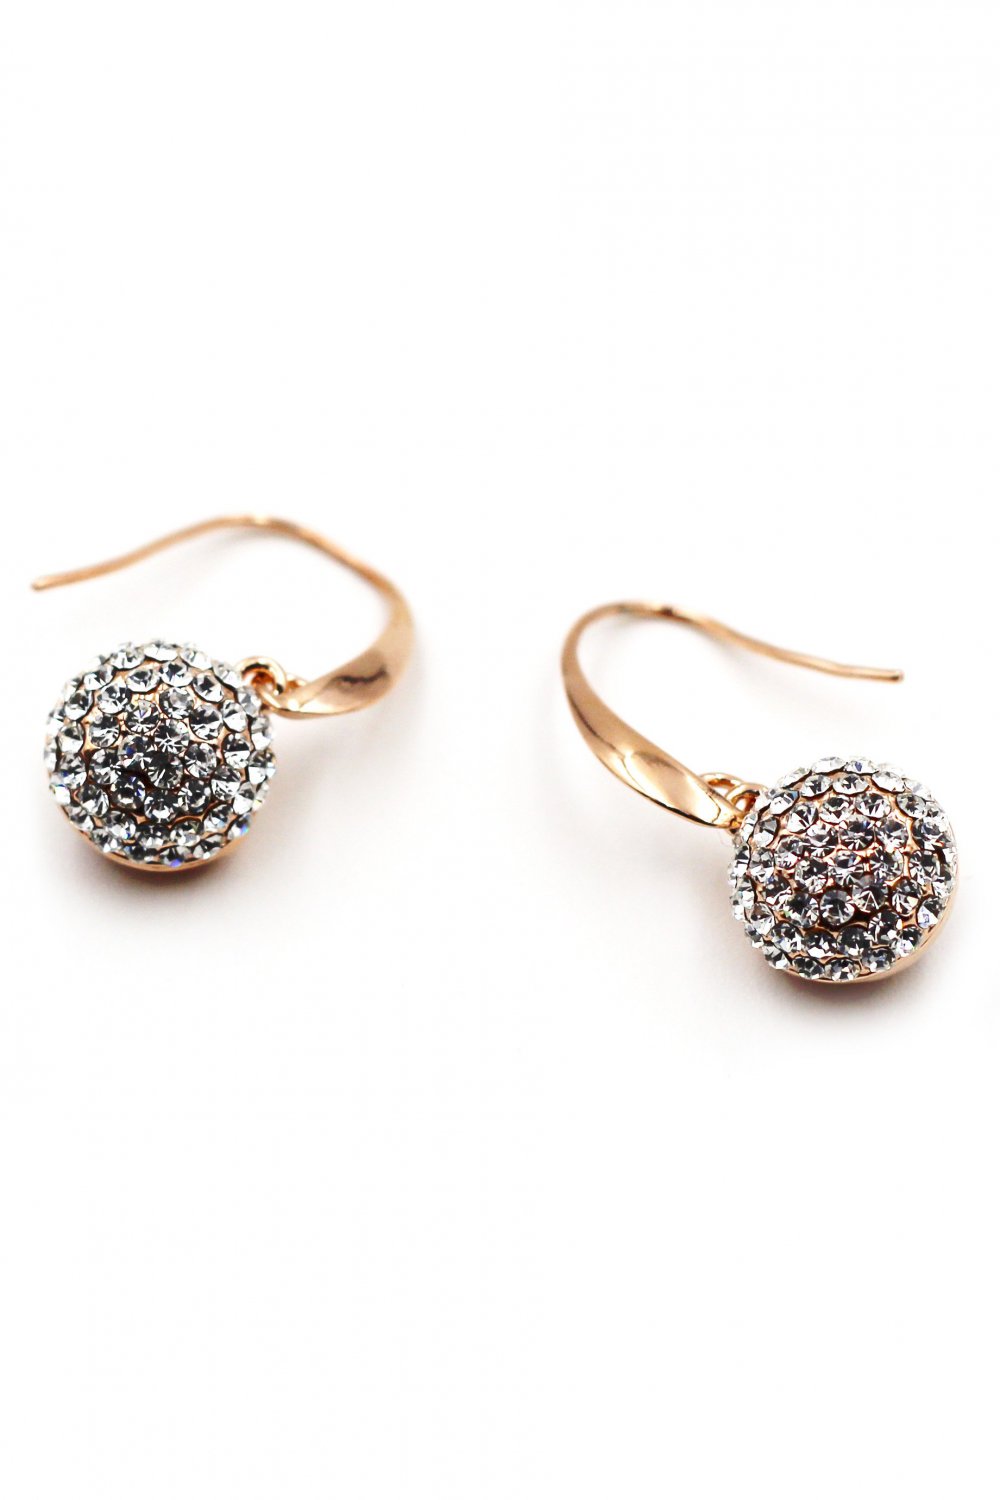 Fashion ball crystal earrings